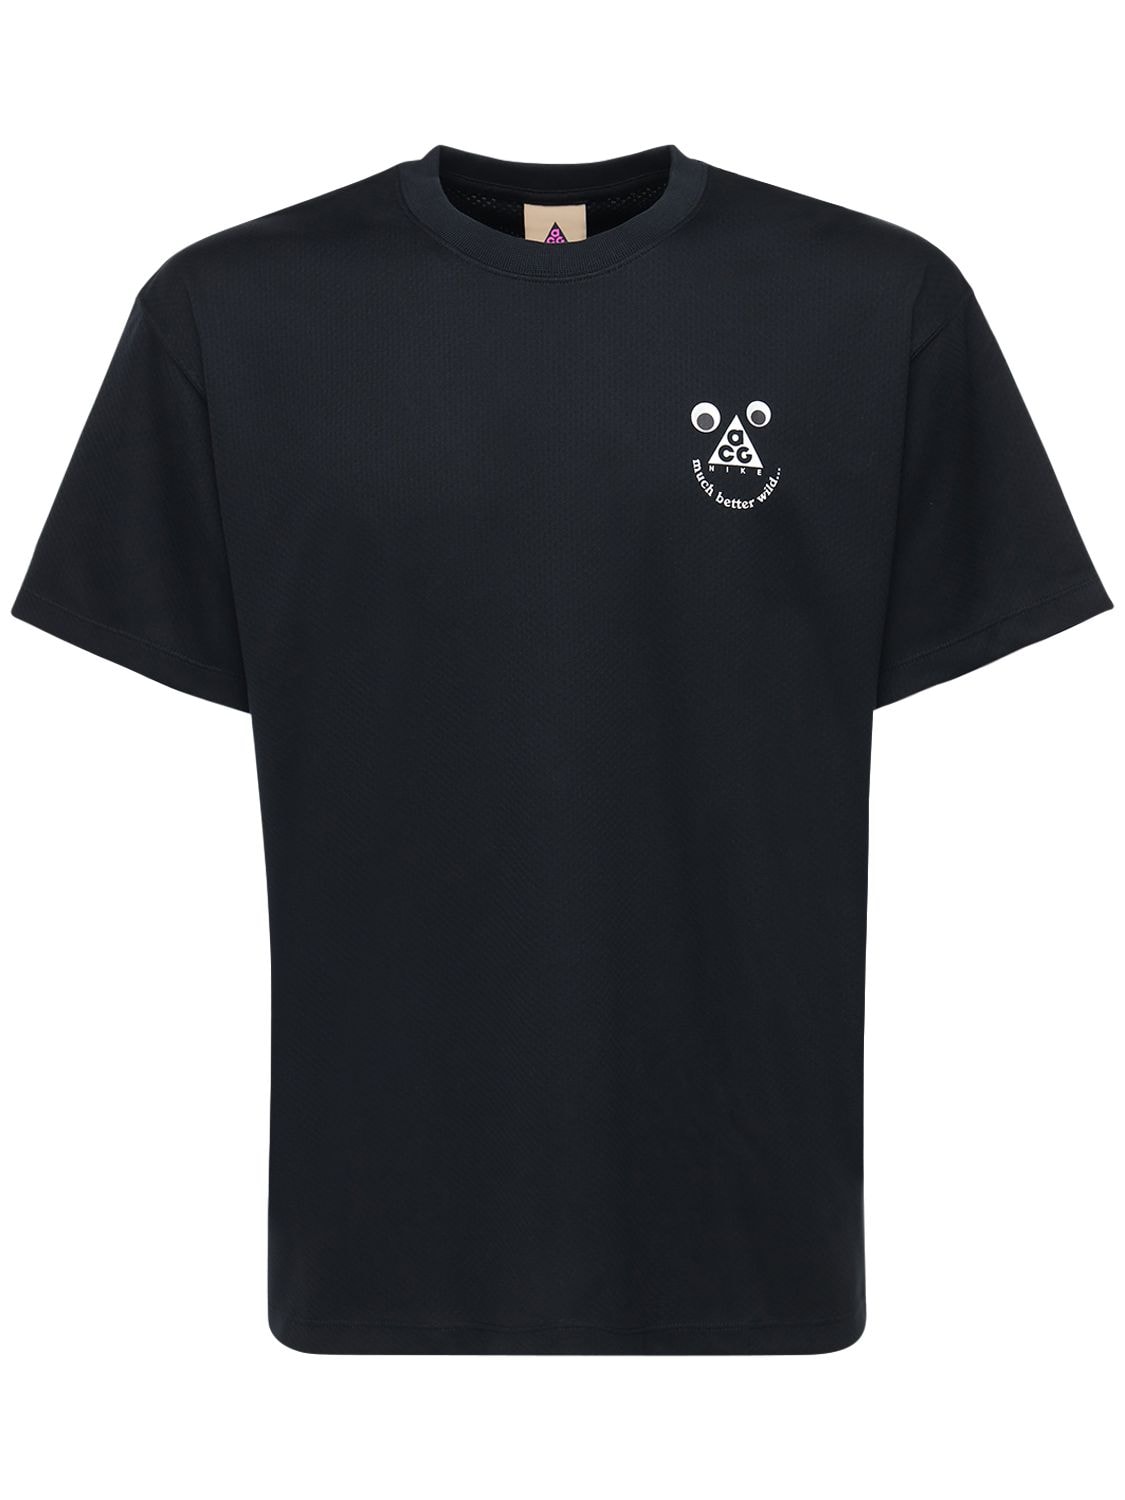 Nike Acg Dri-fit Tech T-shirt In Black